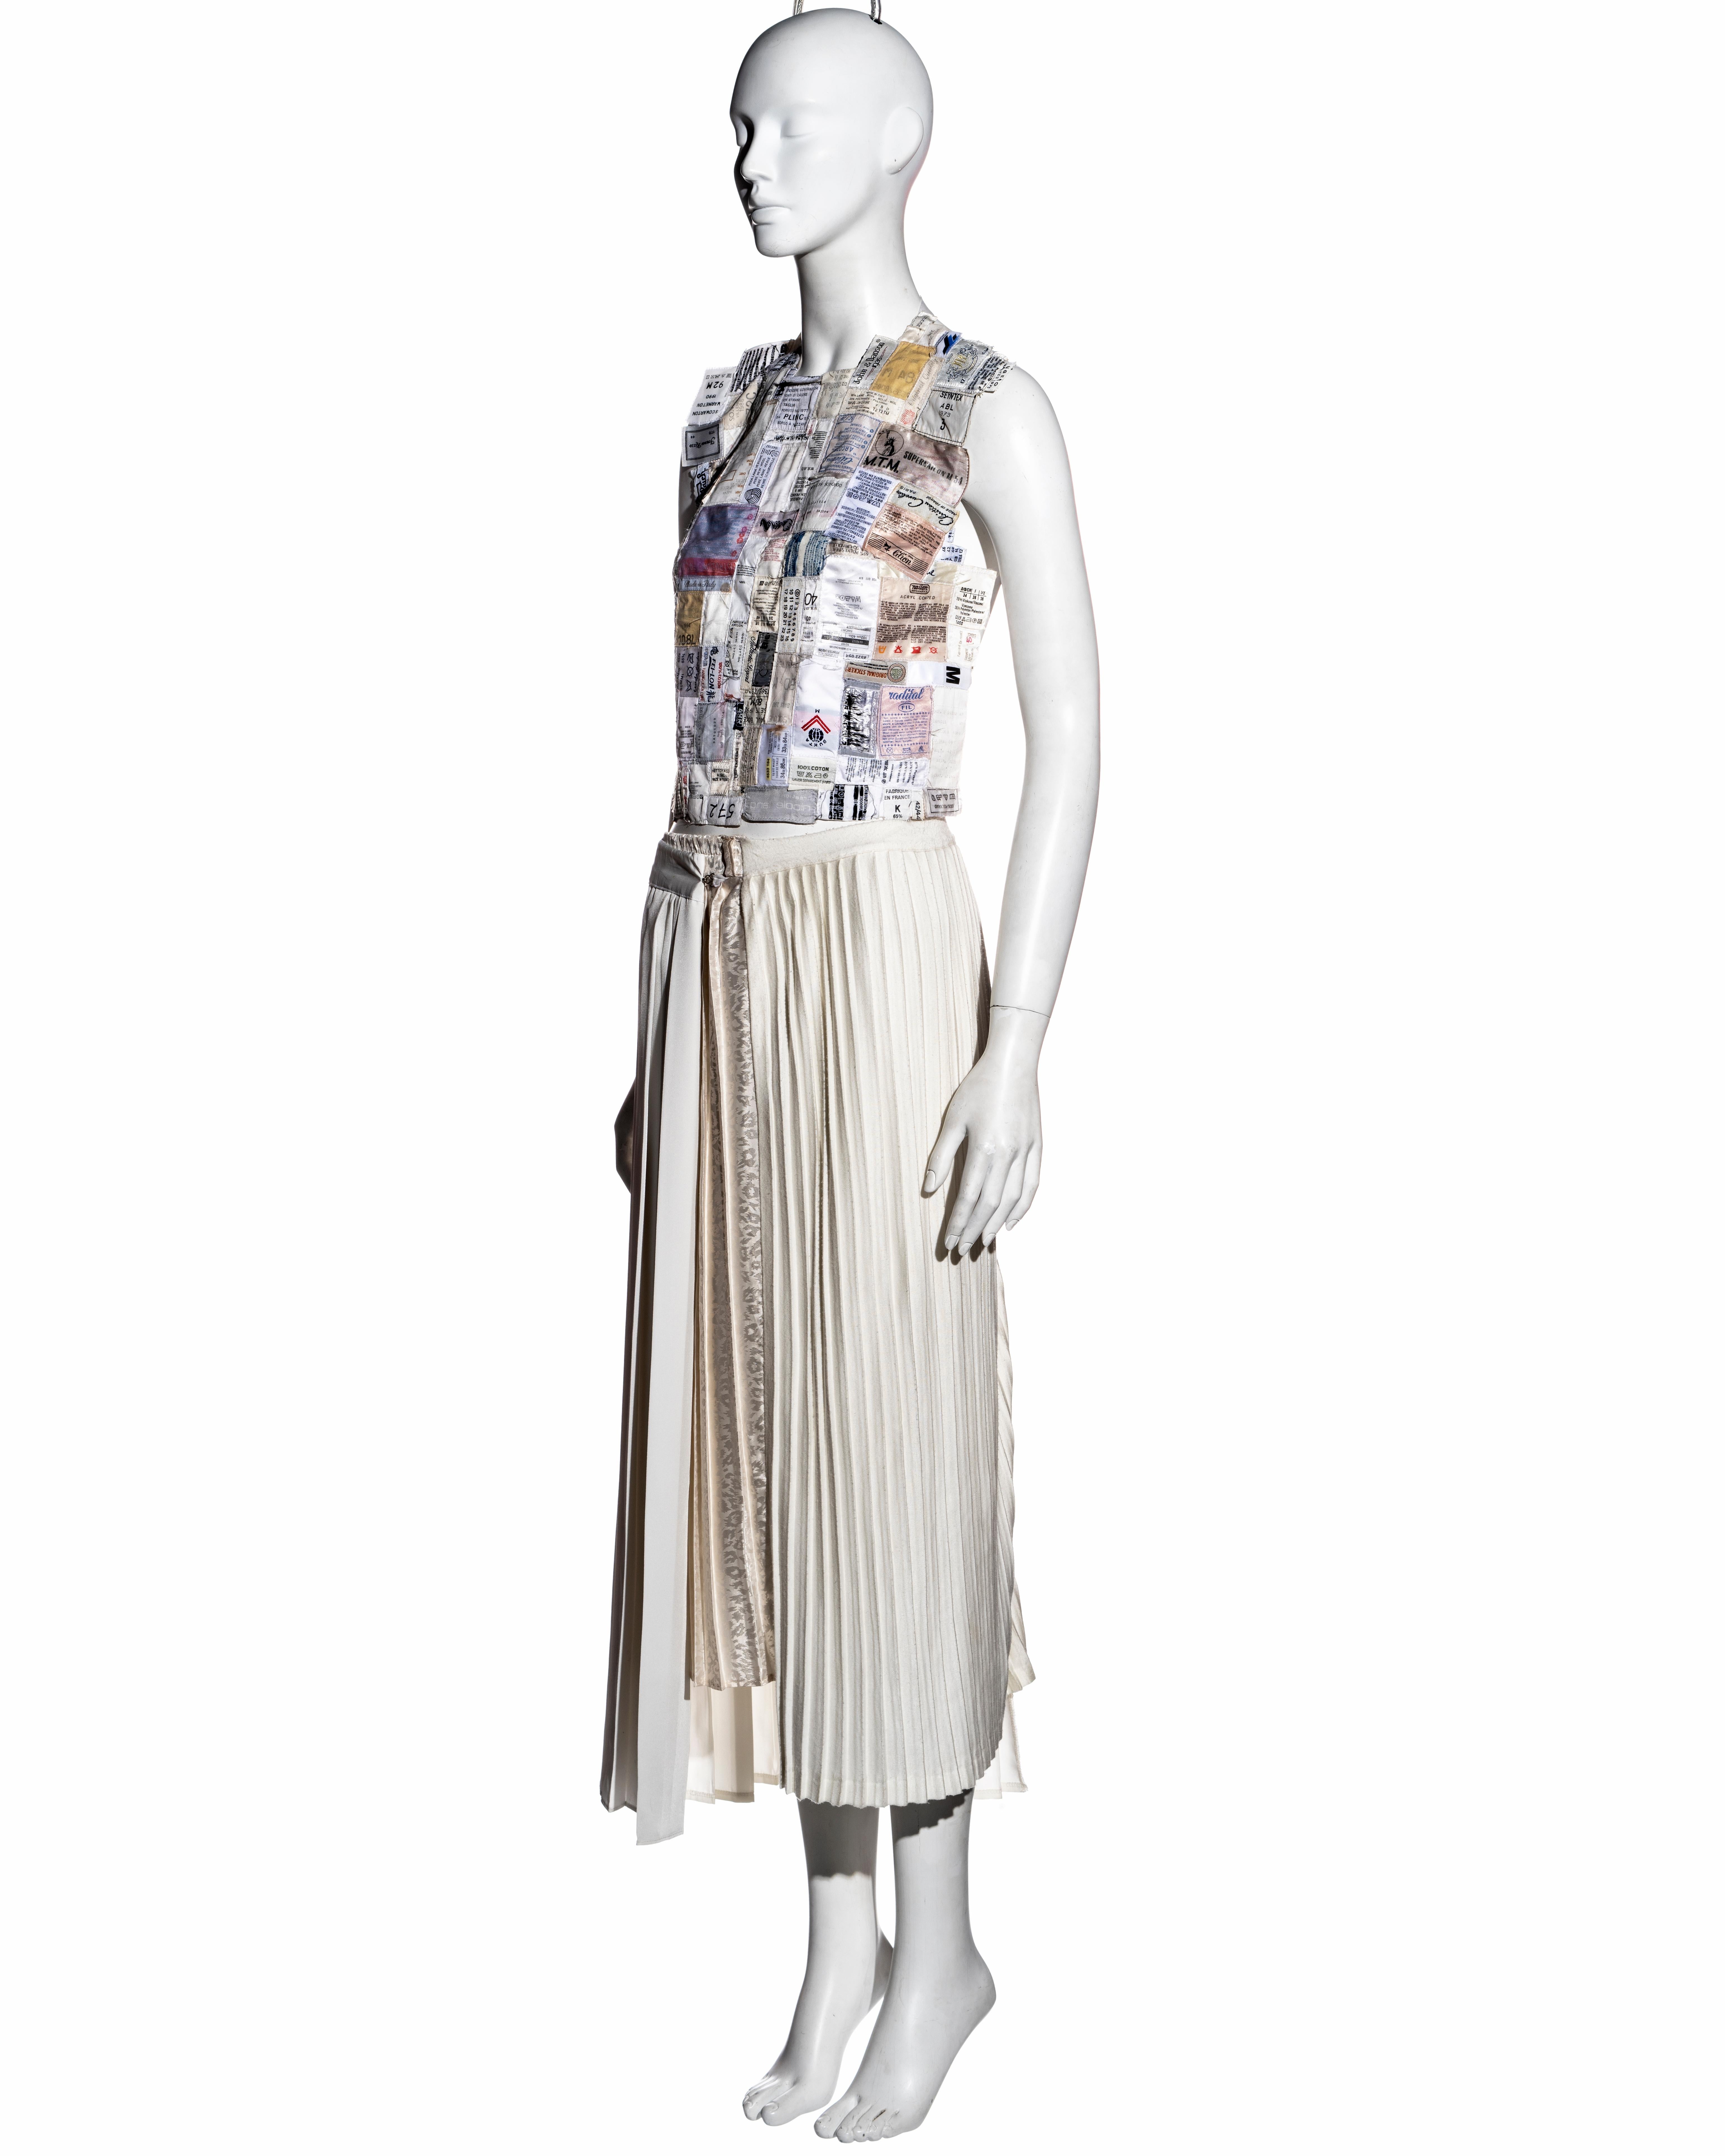 Martin Margiela artisanal shirt front and skirt runway ensemble, ss 2001 6